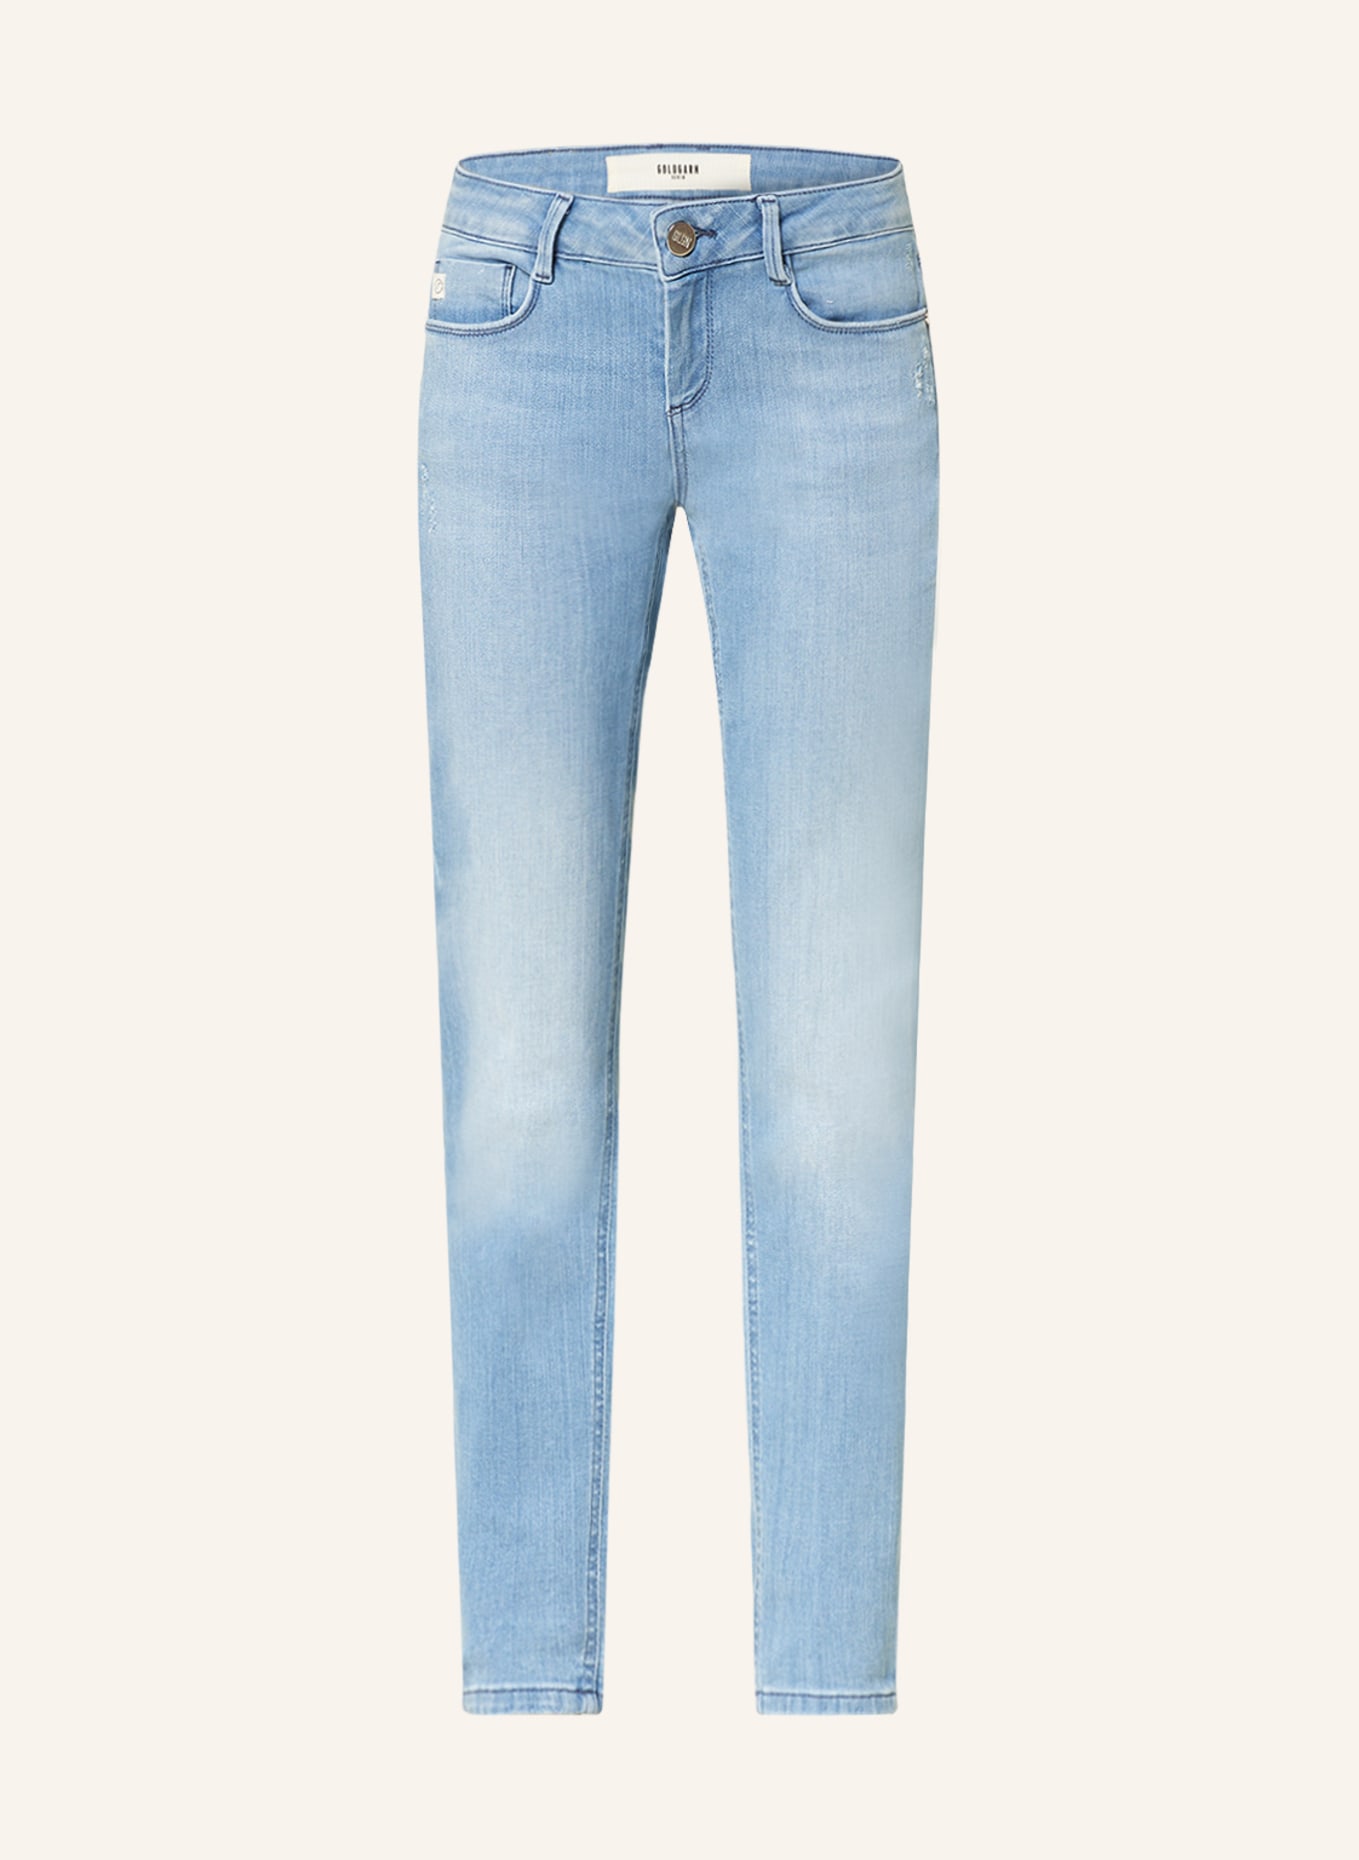 GOLDGARN DENIM Skinny Jeans JUNGBUSCH, Farbe: 1070 light blue (Bild 1)